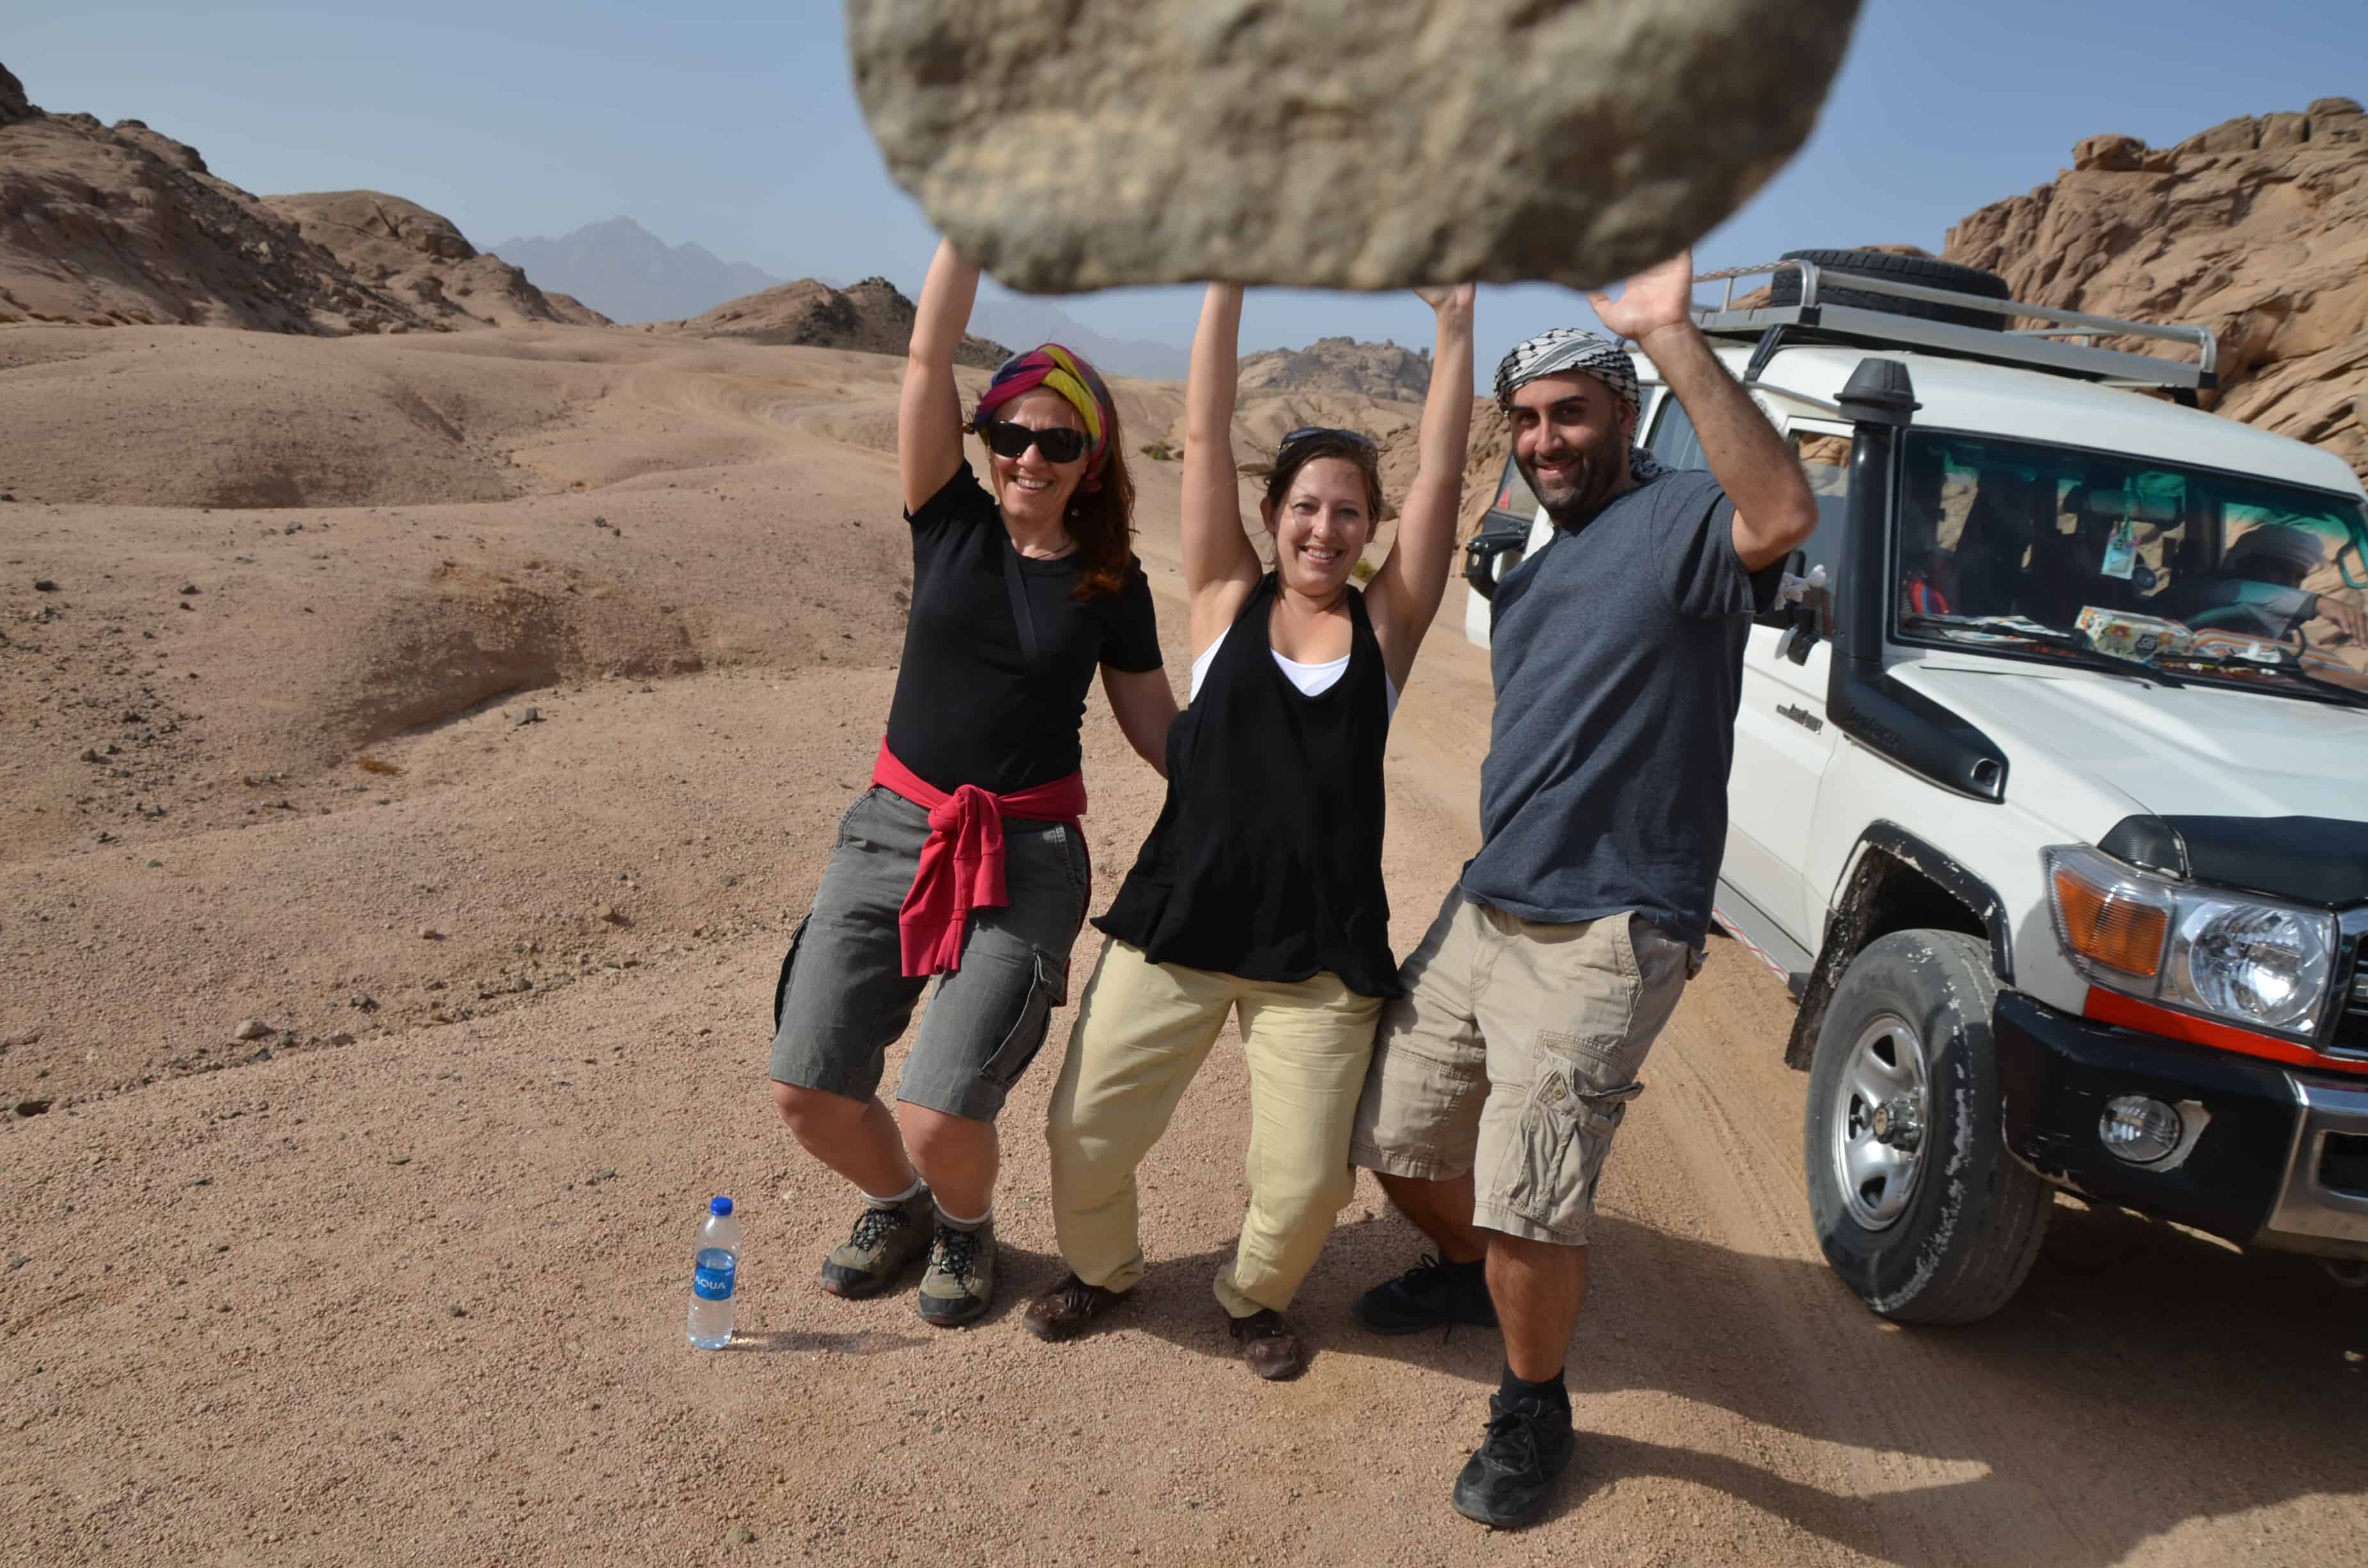 Trick photo on the desert safari in Sinai, Egypt